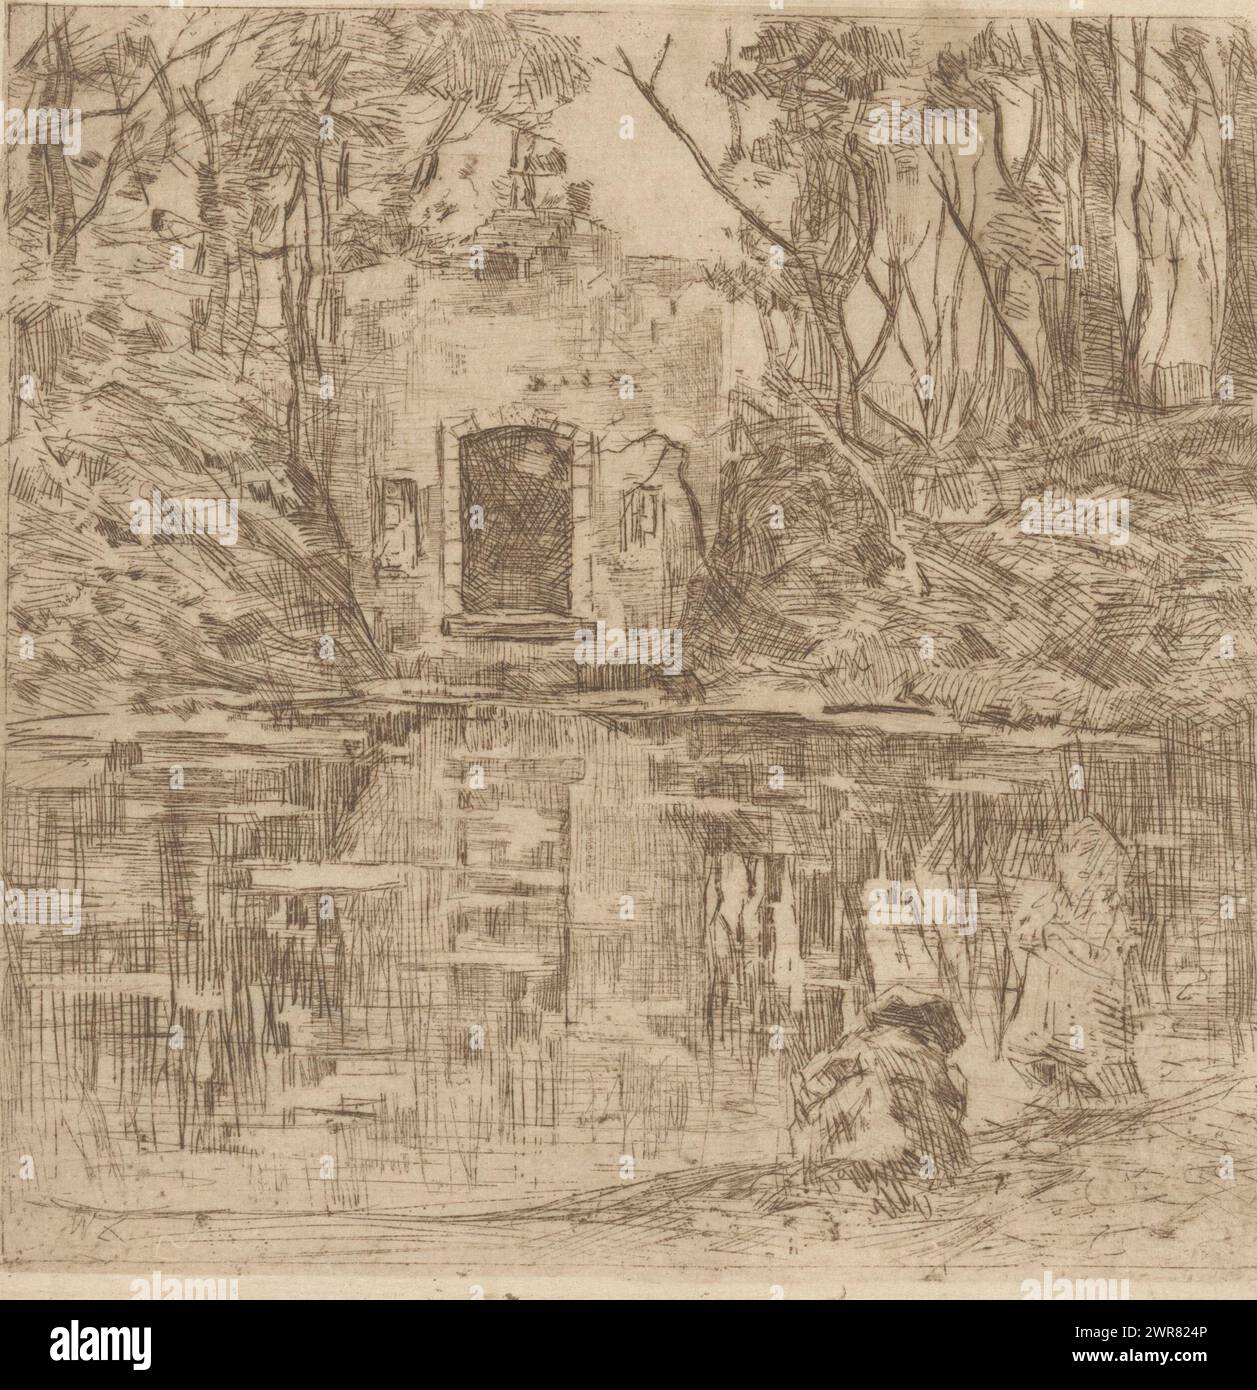 Ruin on a pond, Ruin on a pond (Lage Vuursche) (original title), print maker: Willem de Zwart, c. 1896, paper, etching, drypoint, height 151 mm × width 150 mm, print Stock Photo